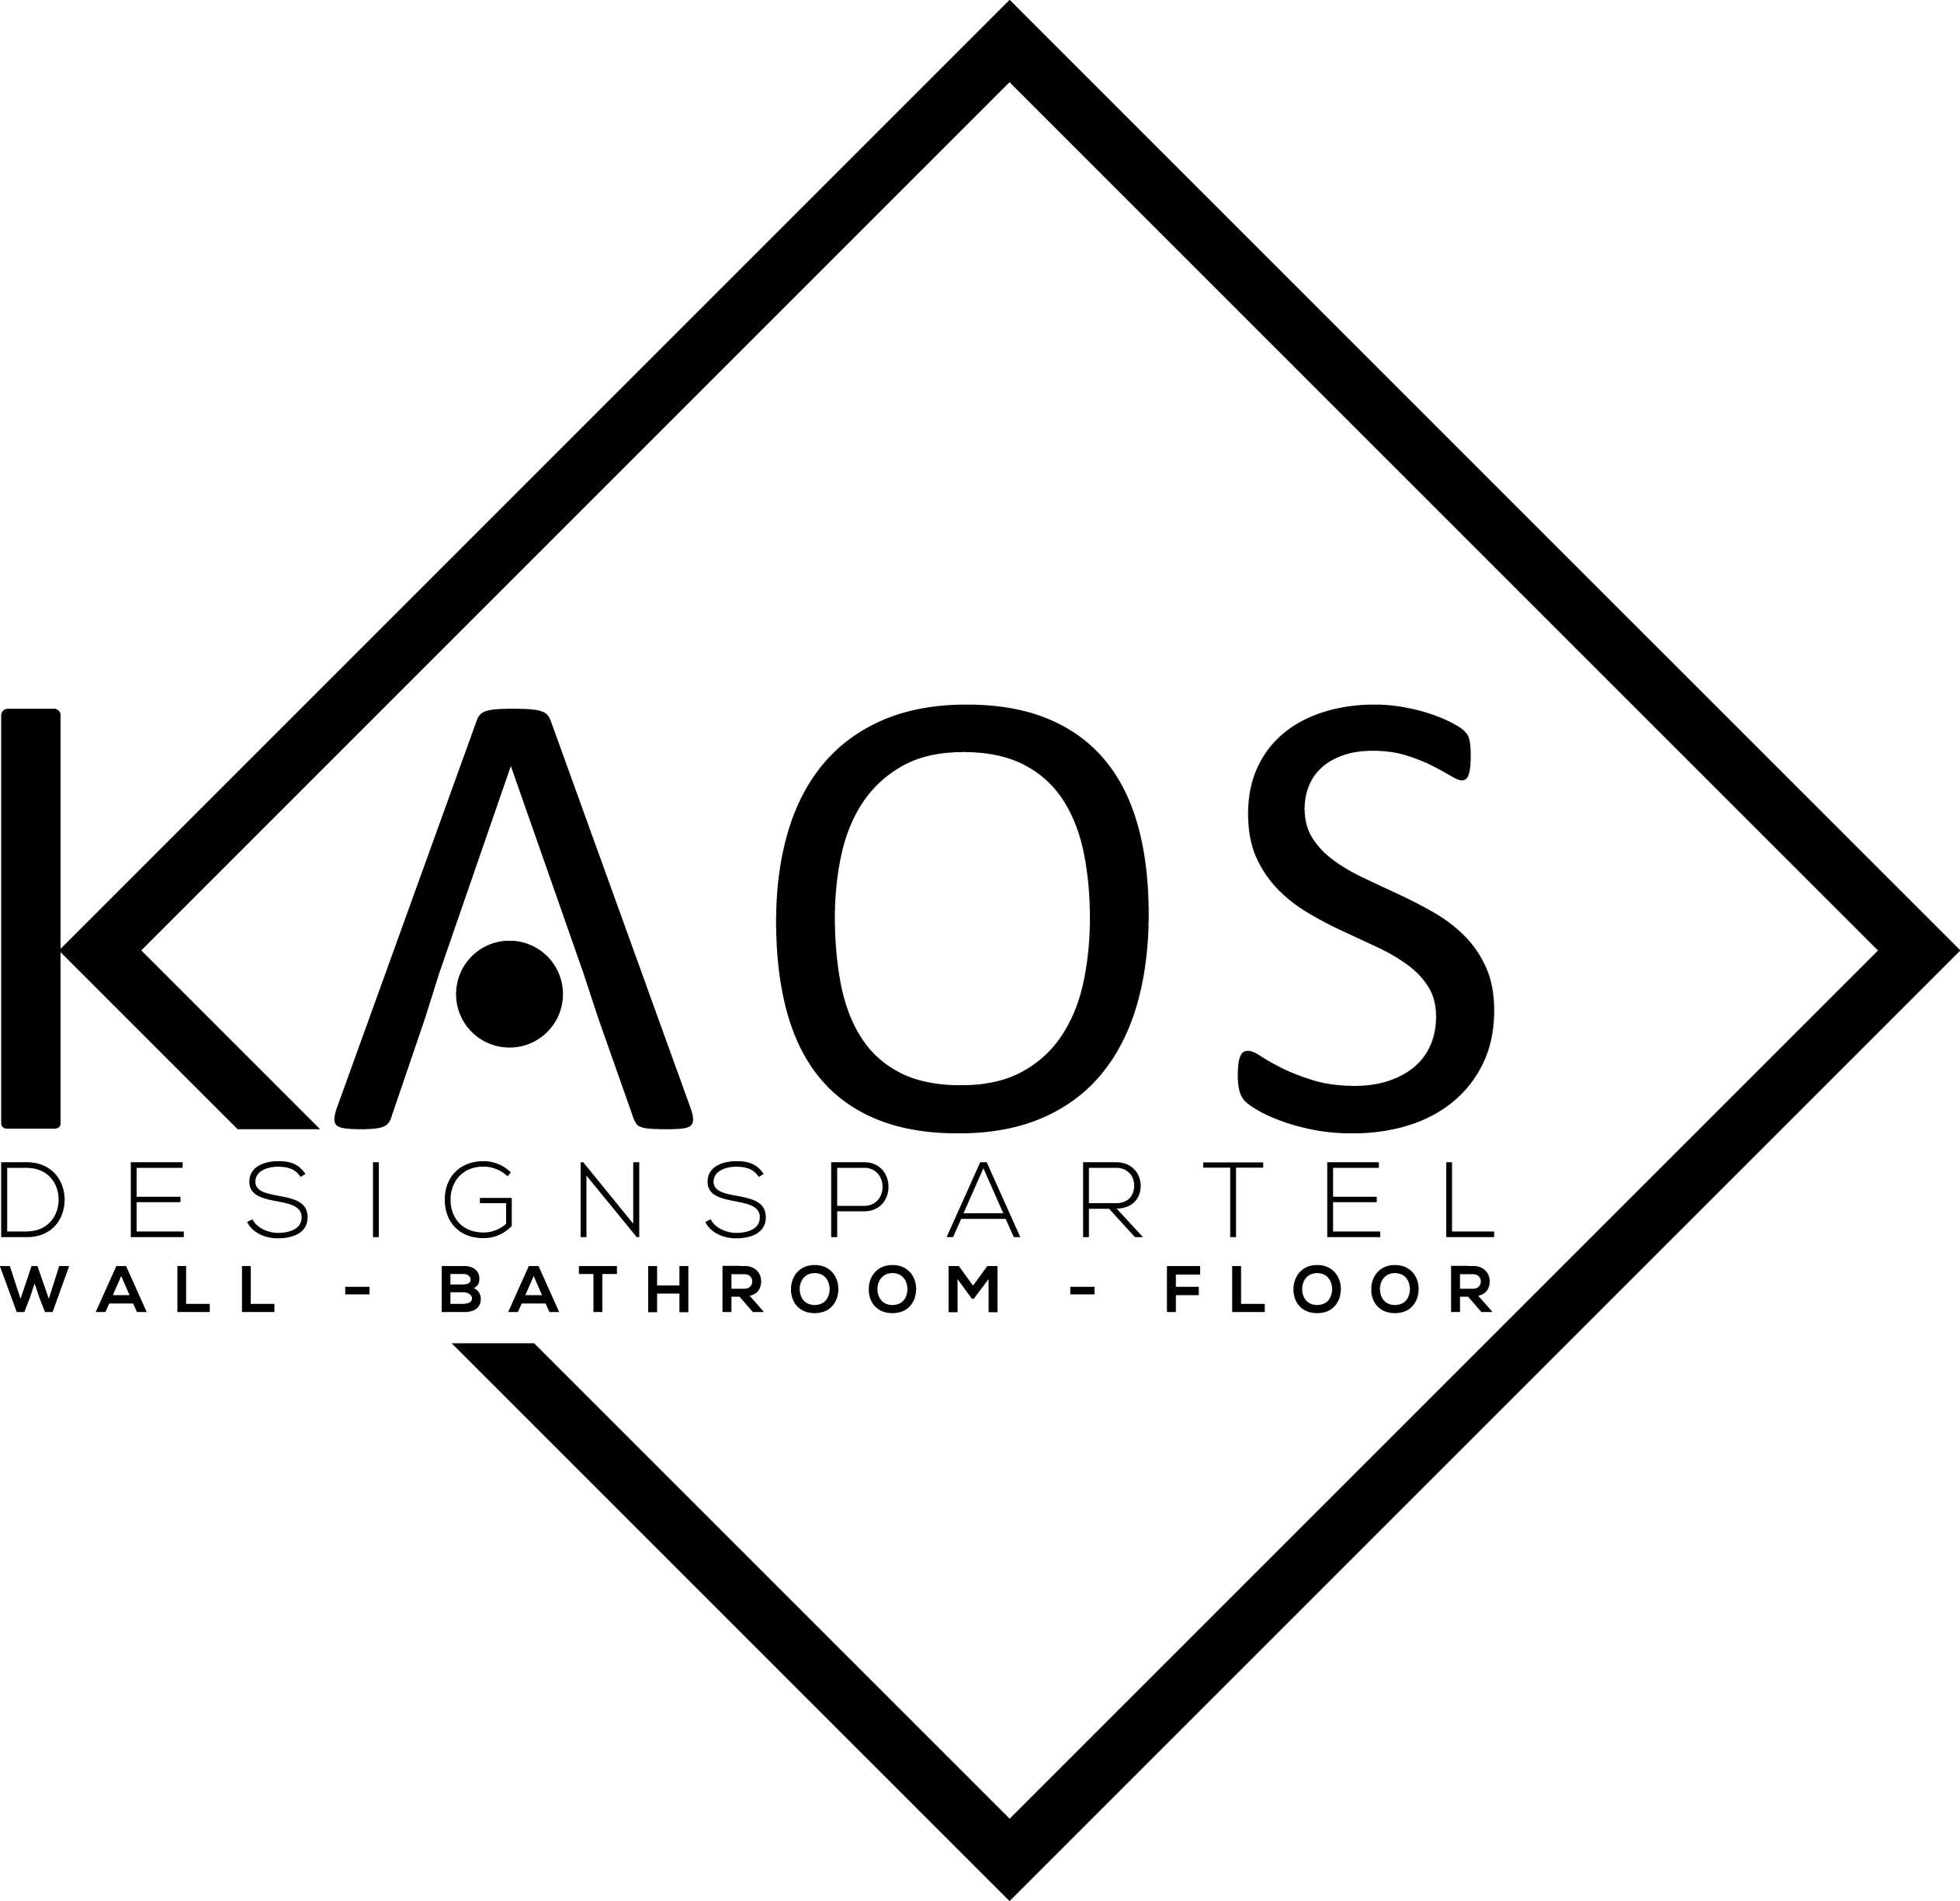 kaos  designspartel logo